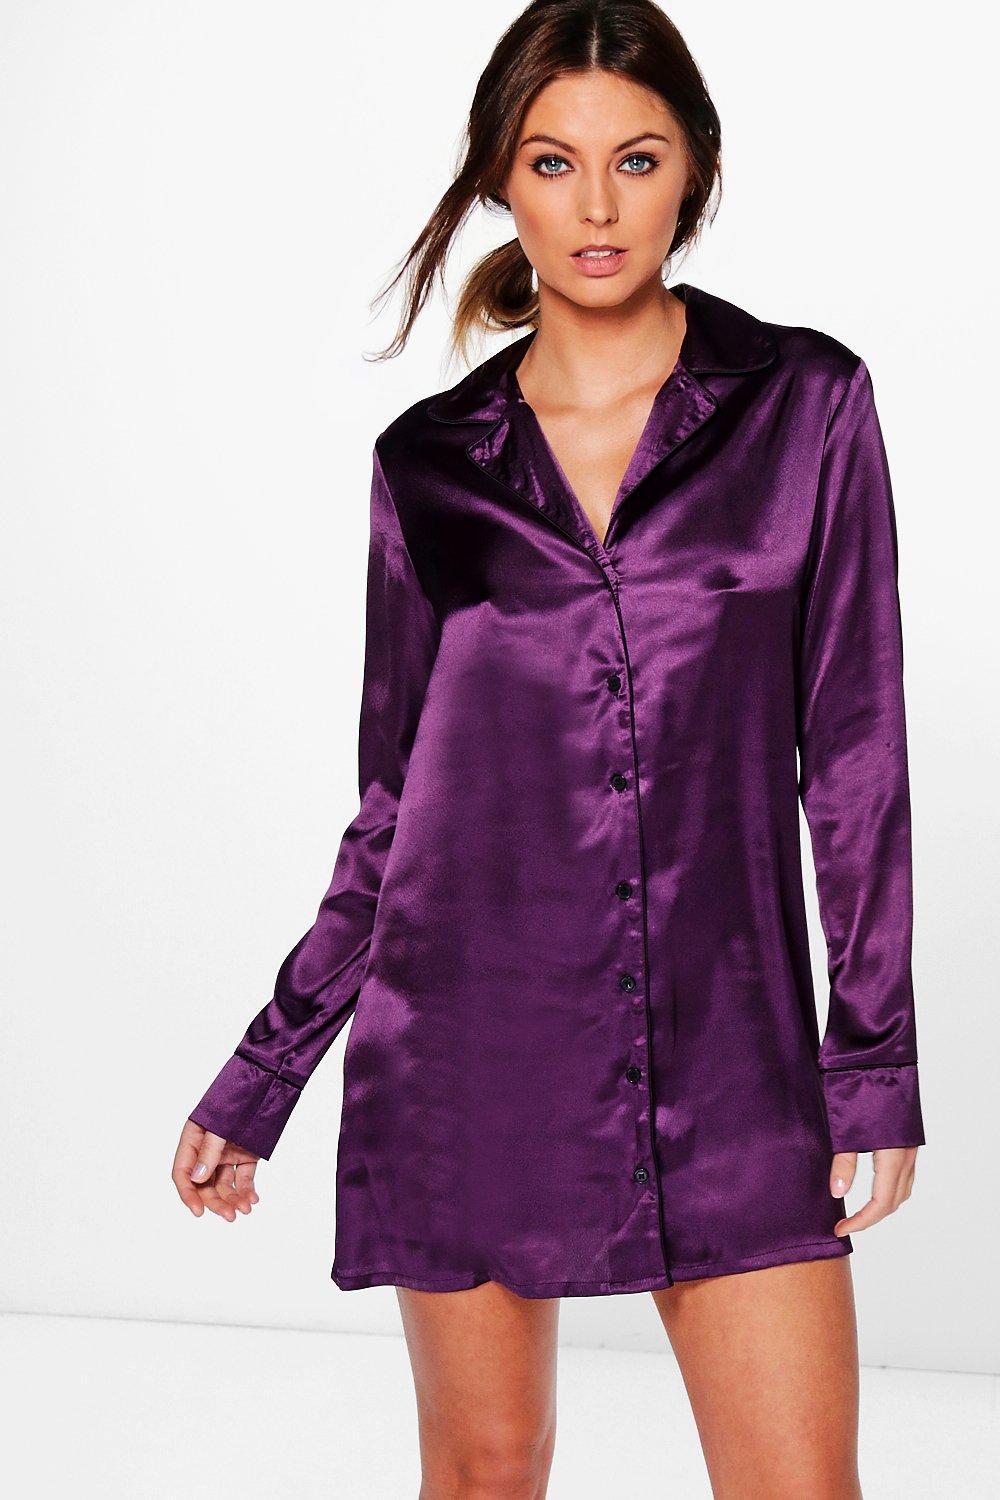 Lyst Boohoo Isabella Satin  Night Shirt  Dress  in Purple